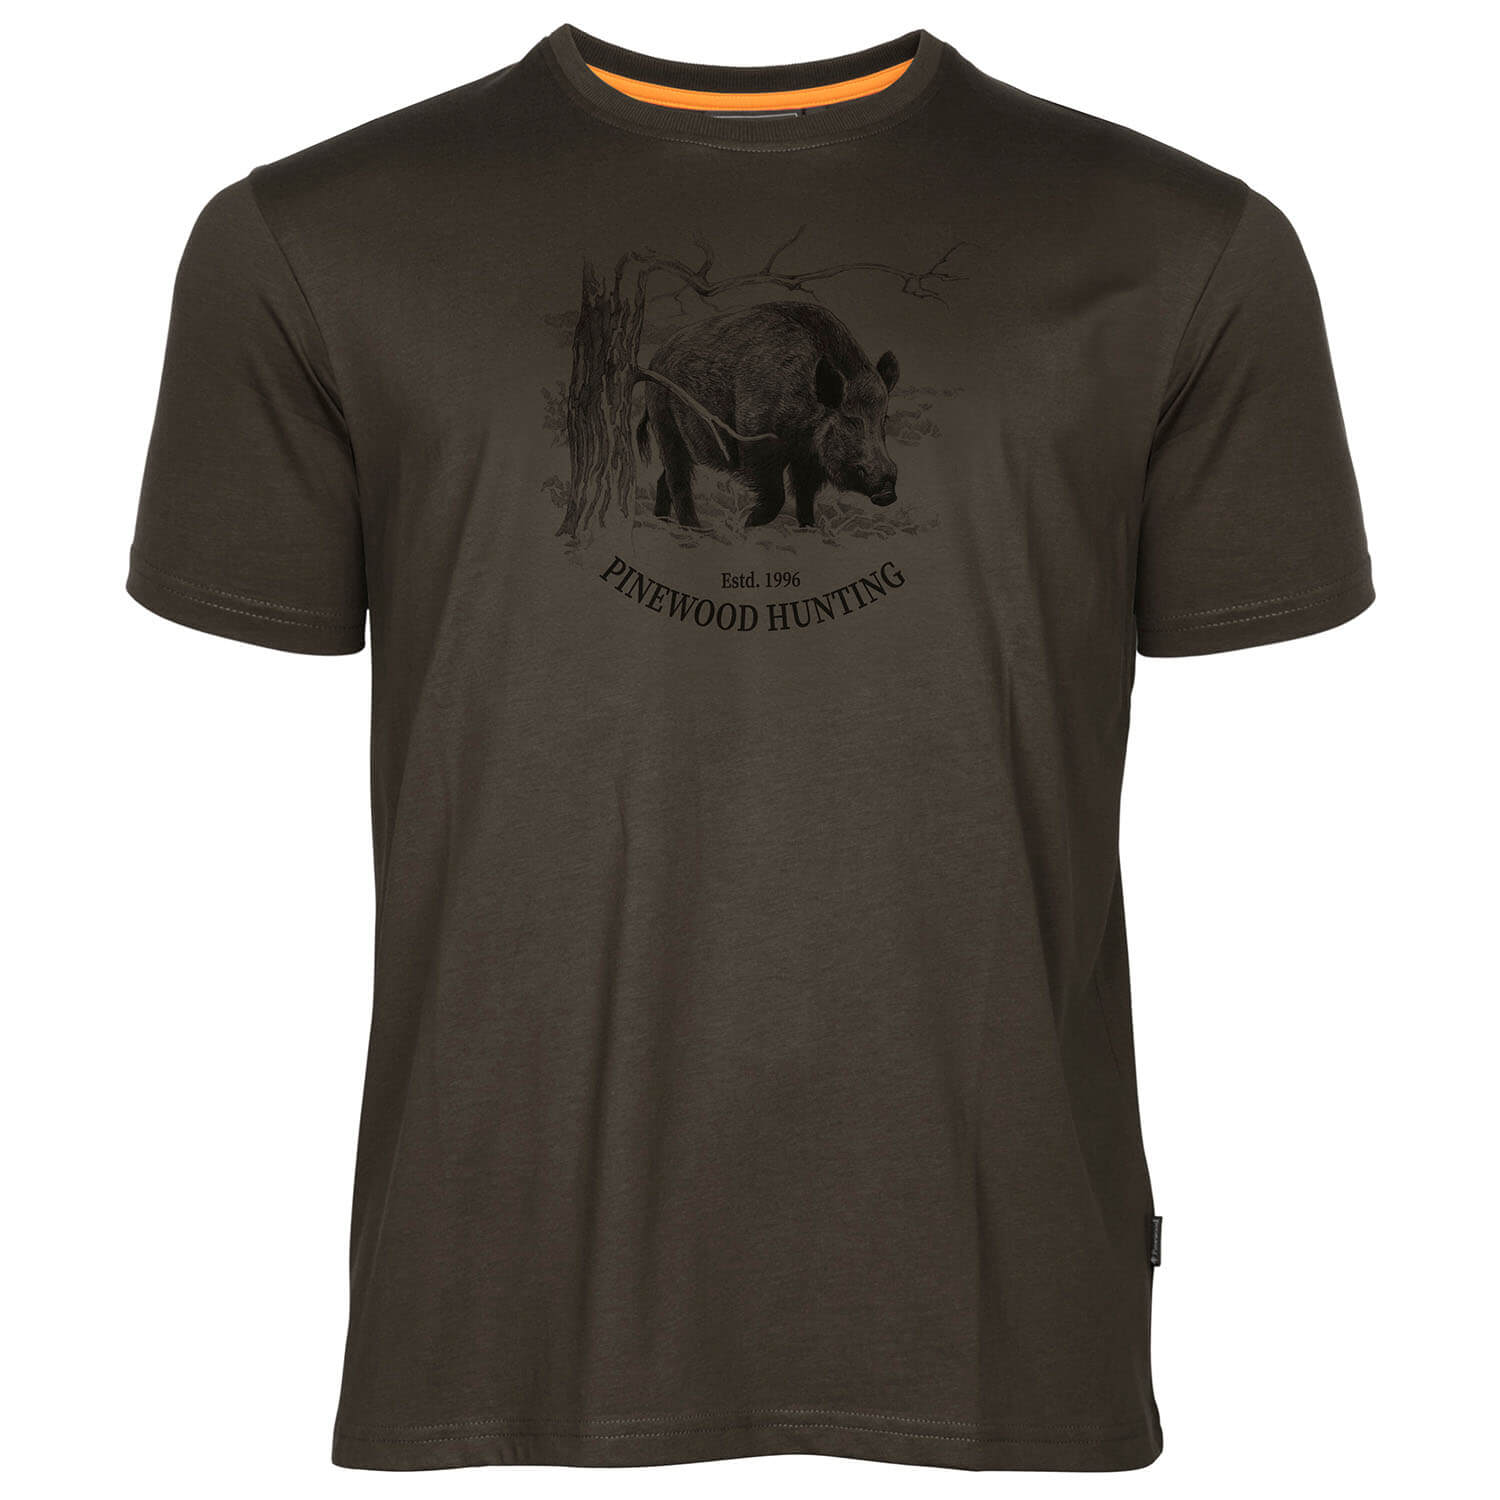  Pinewood T-shirt Wild Zwijn - Jachtshirts